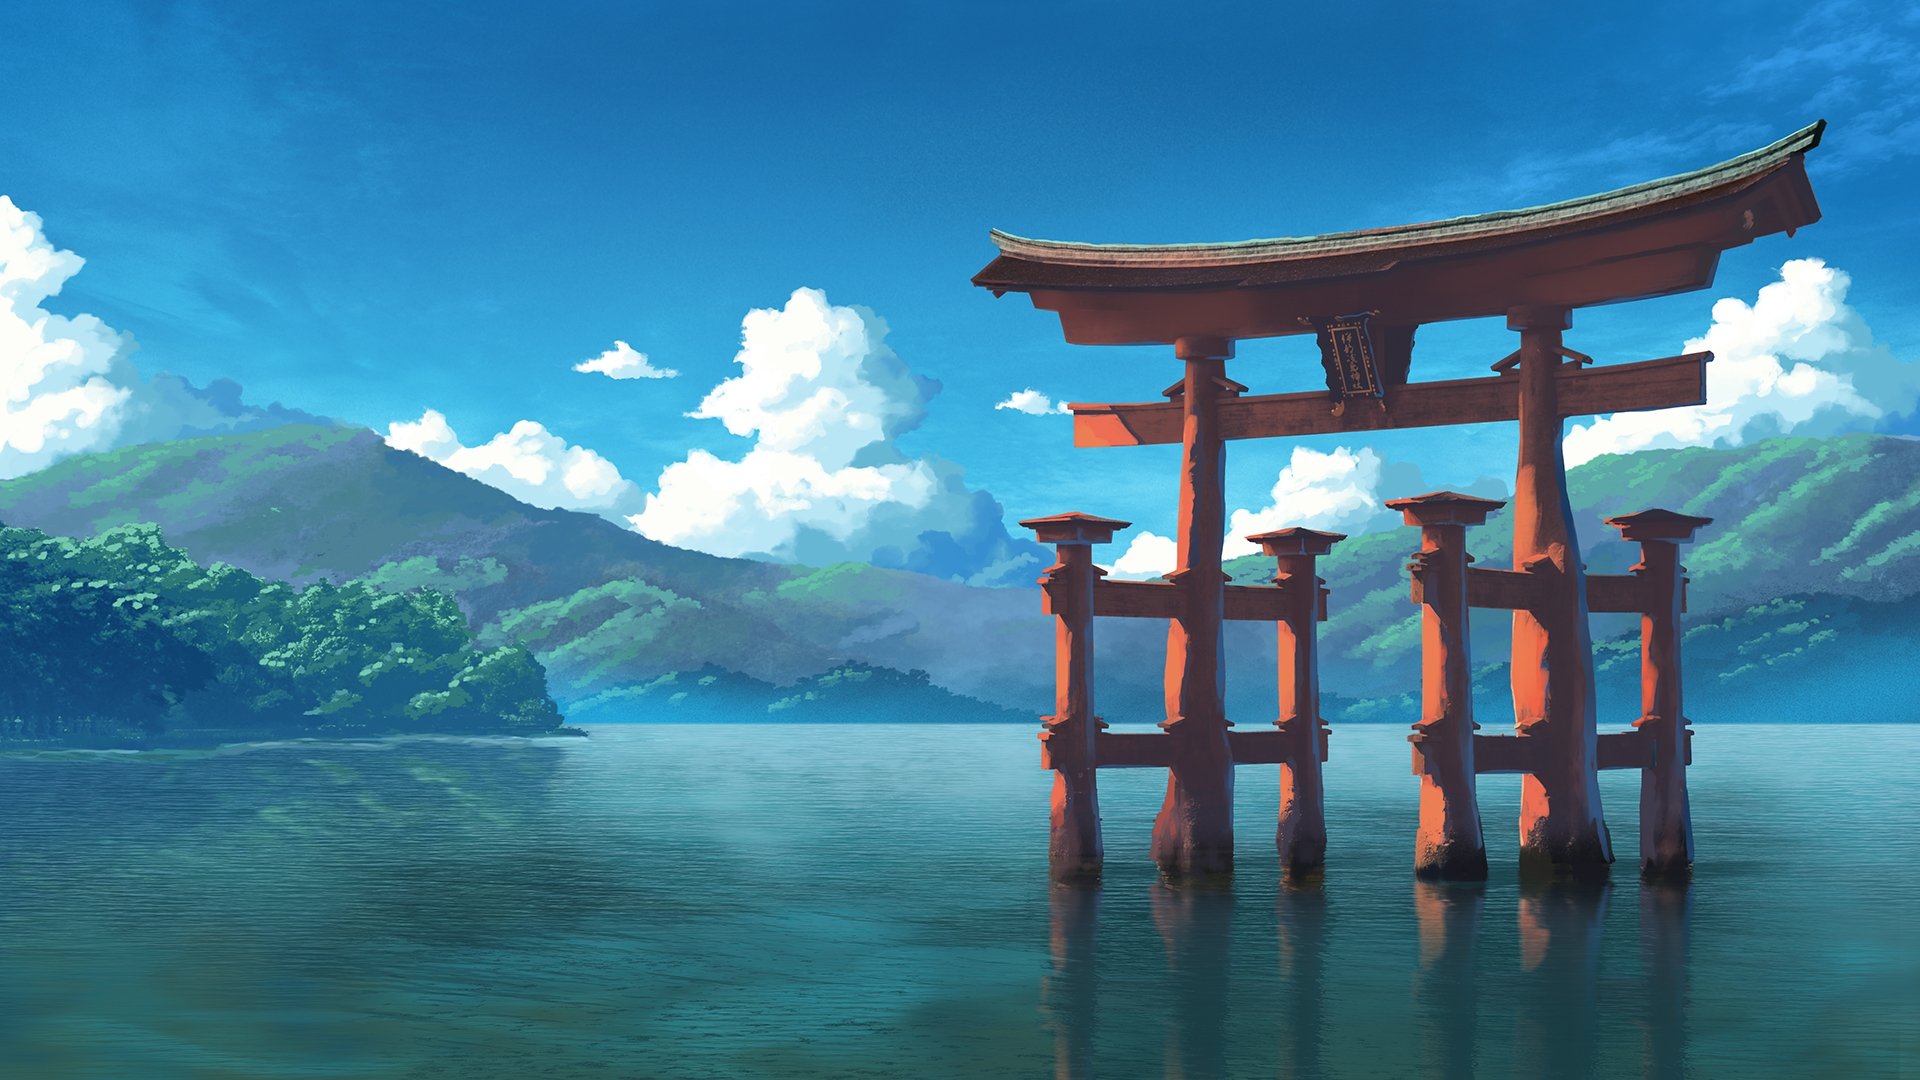 Download 1920x1080 Anime Landscape, Shrine, Lake, Torii